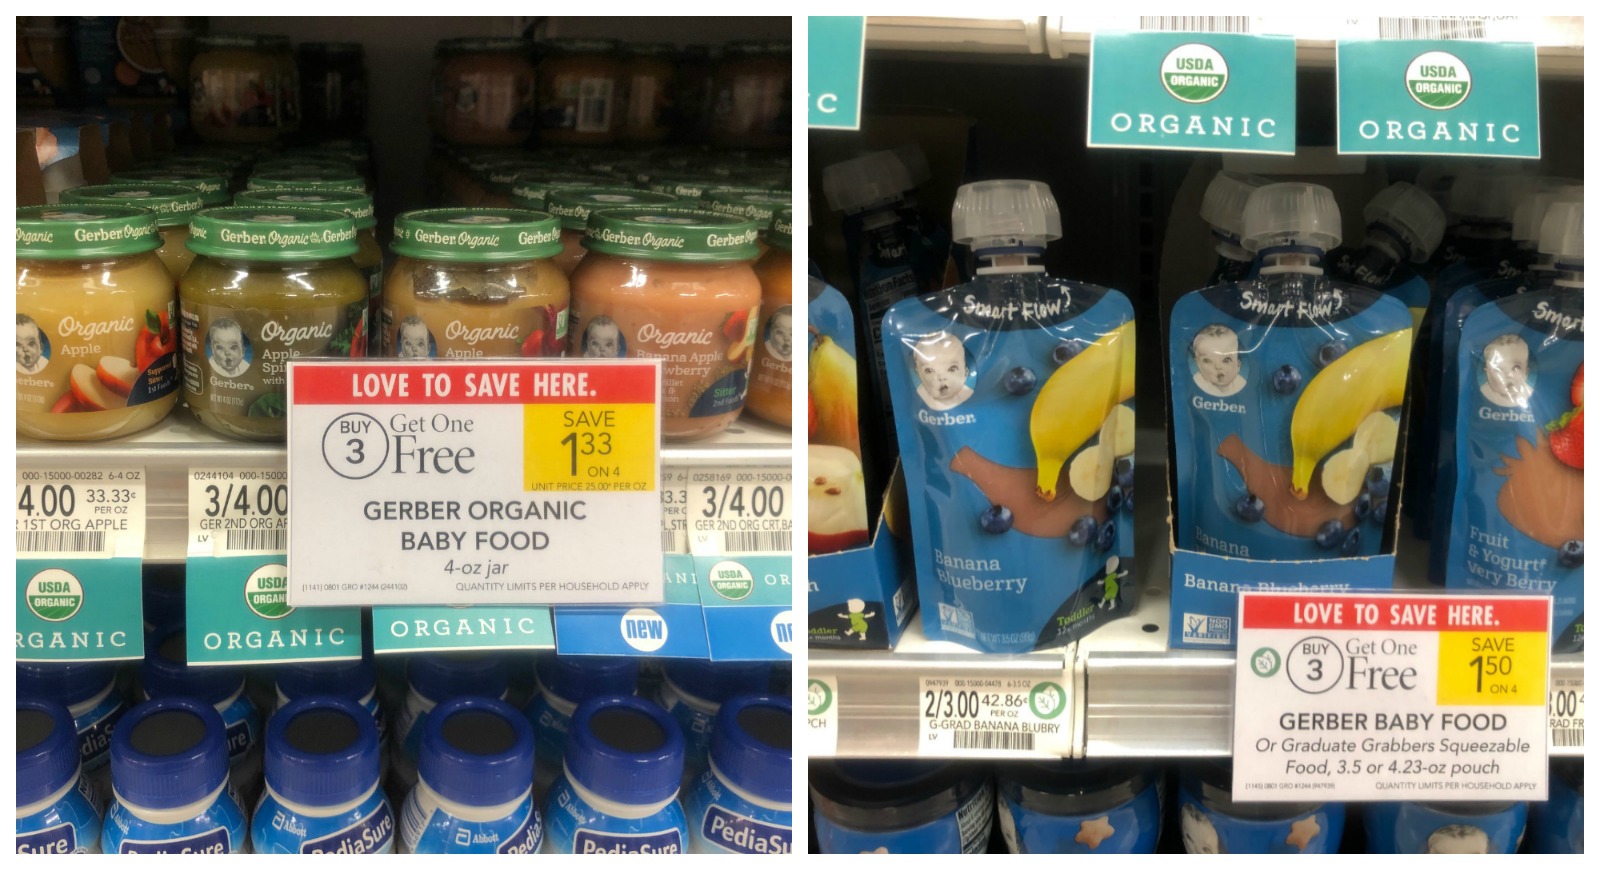 Gerber Baby Food As Low As 75¢ Per Jar 